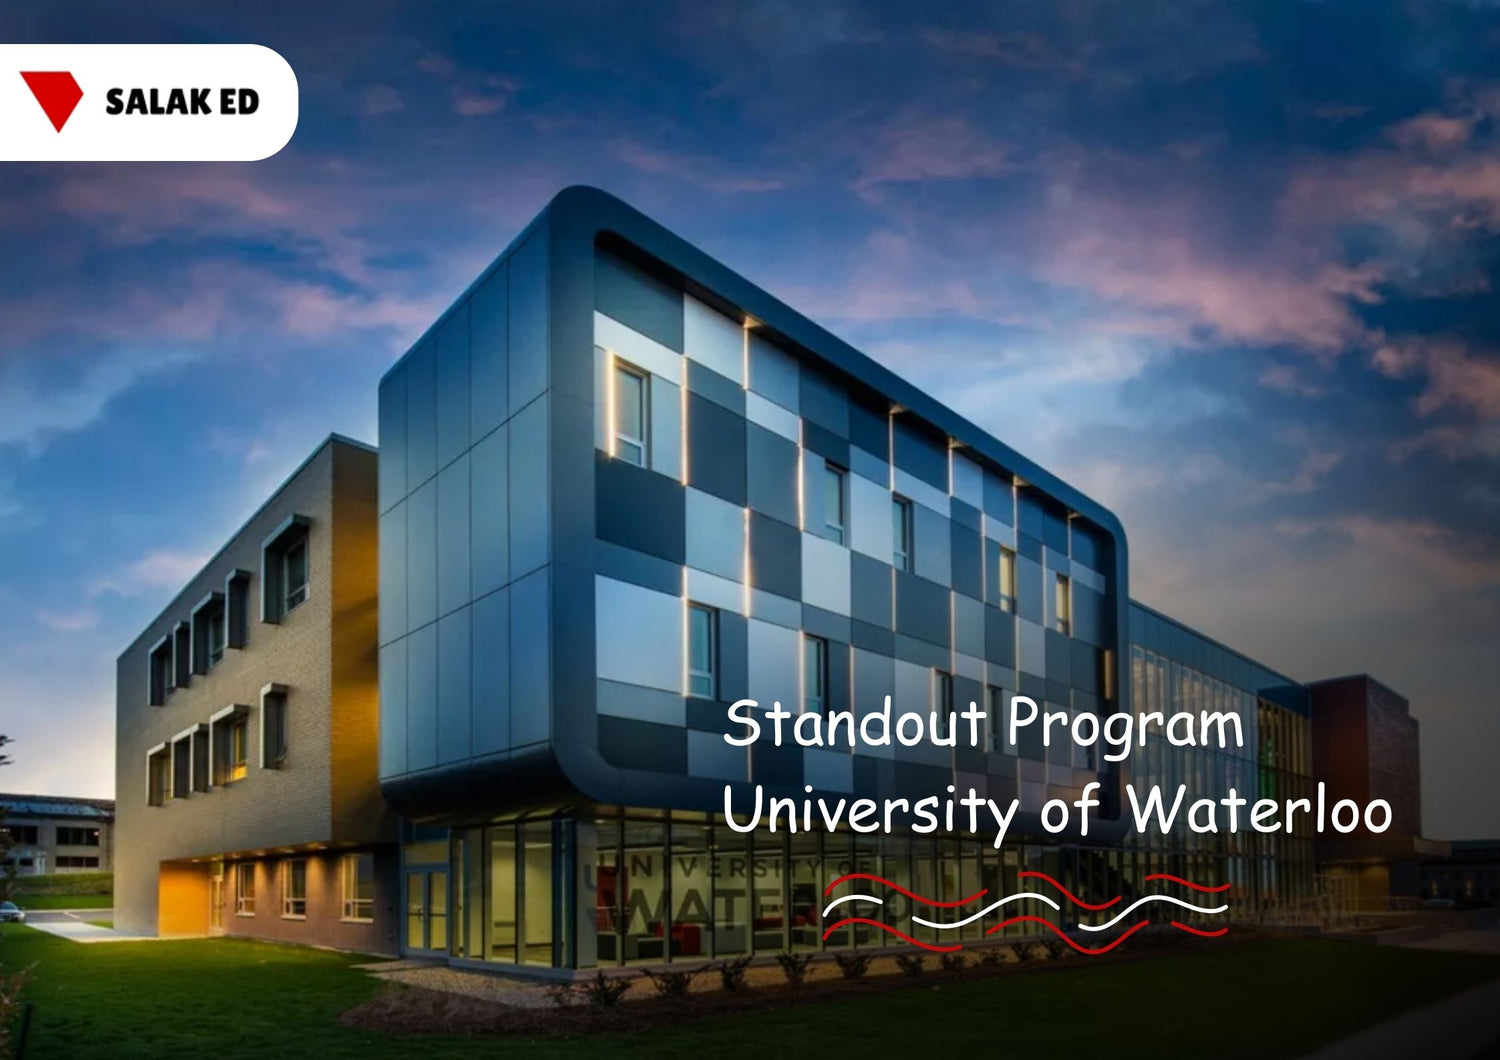 Standout Program University of Waterloo